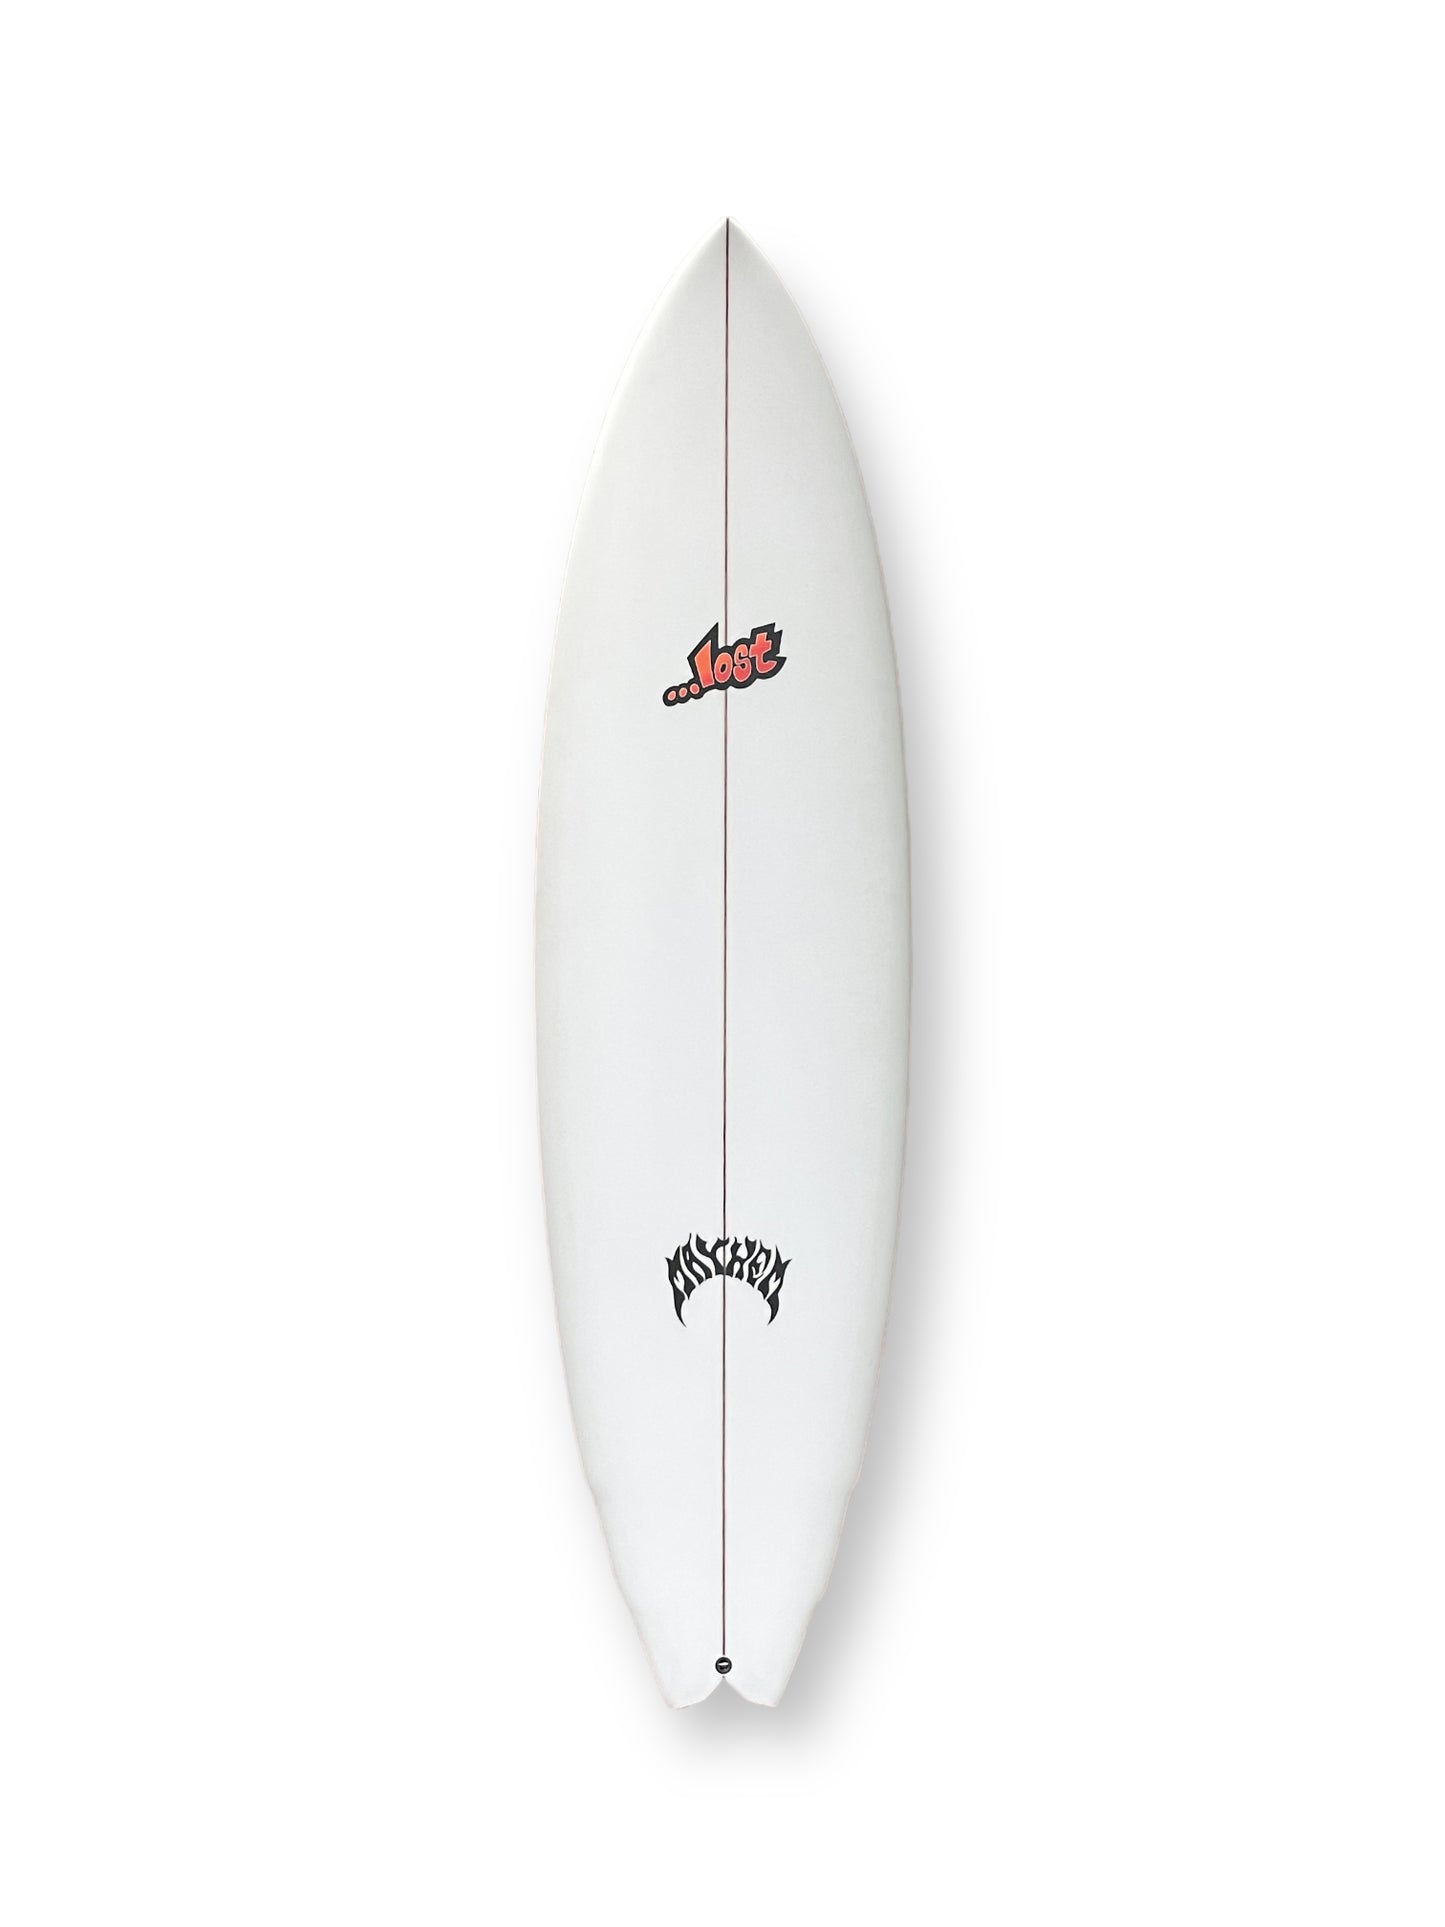 LOST MAYHEM CROWD KILLER 6'6" SURFBOARD